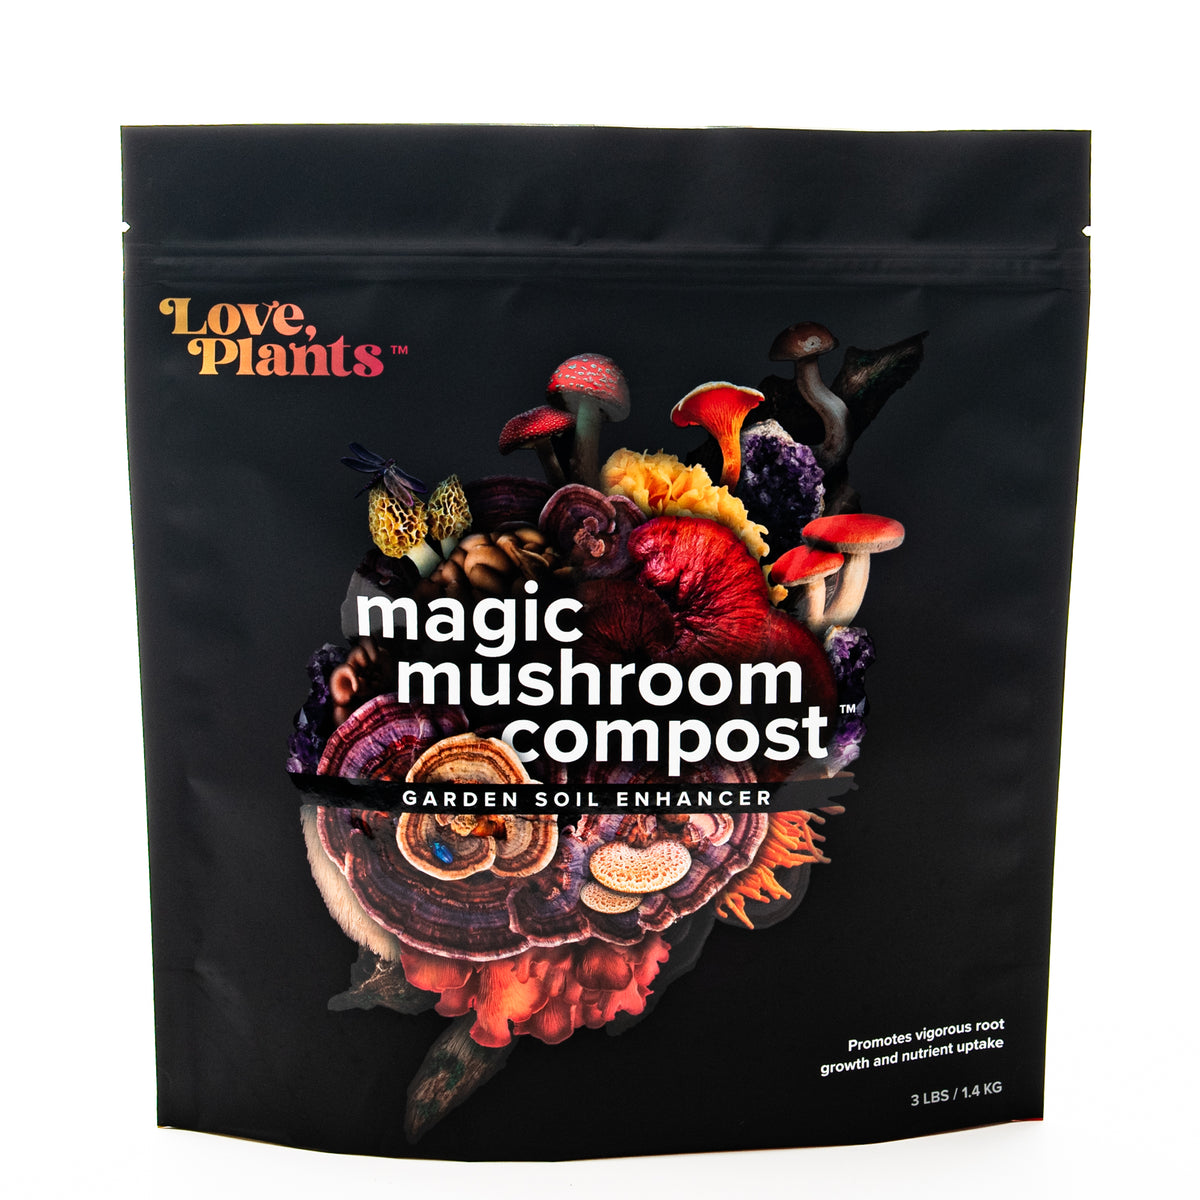 Magic Mushroom Compost garden soil enhancer front of bag product image